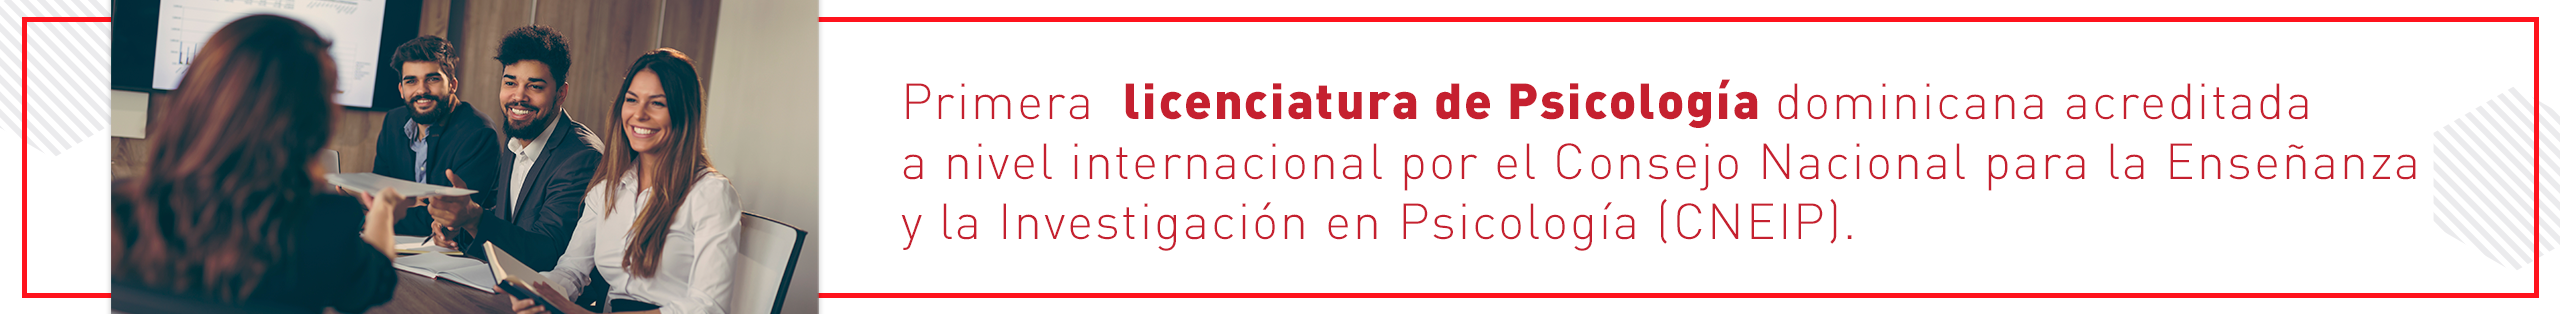 accreditation-psychology-4e67213b Instituto Tecnológico de Santo Domingo - INTEC in Summary